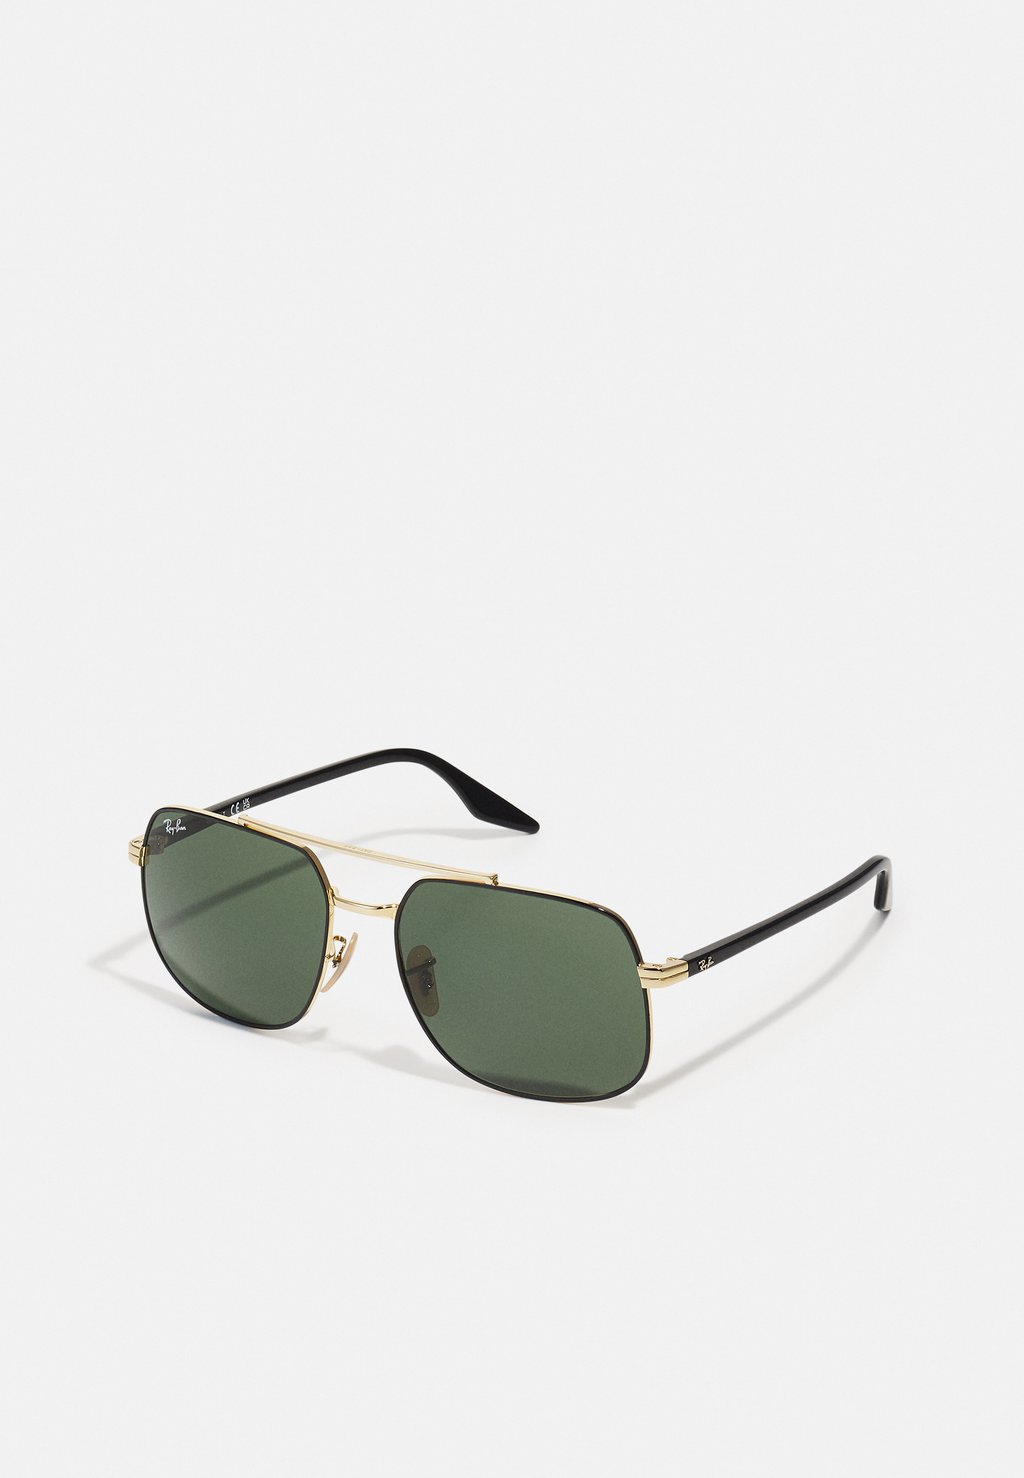 Солнцезащитные очки Ray-Ban, цвет black/green